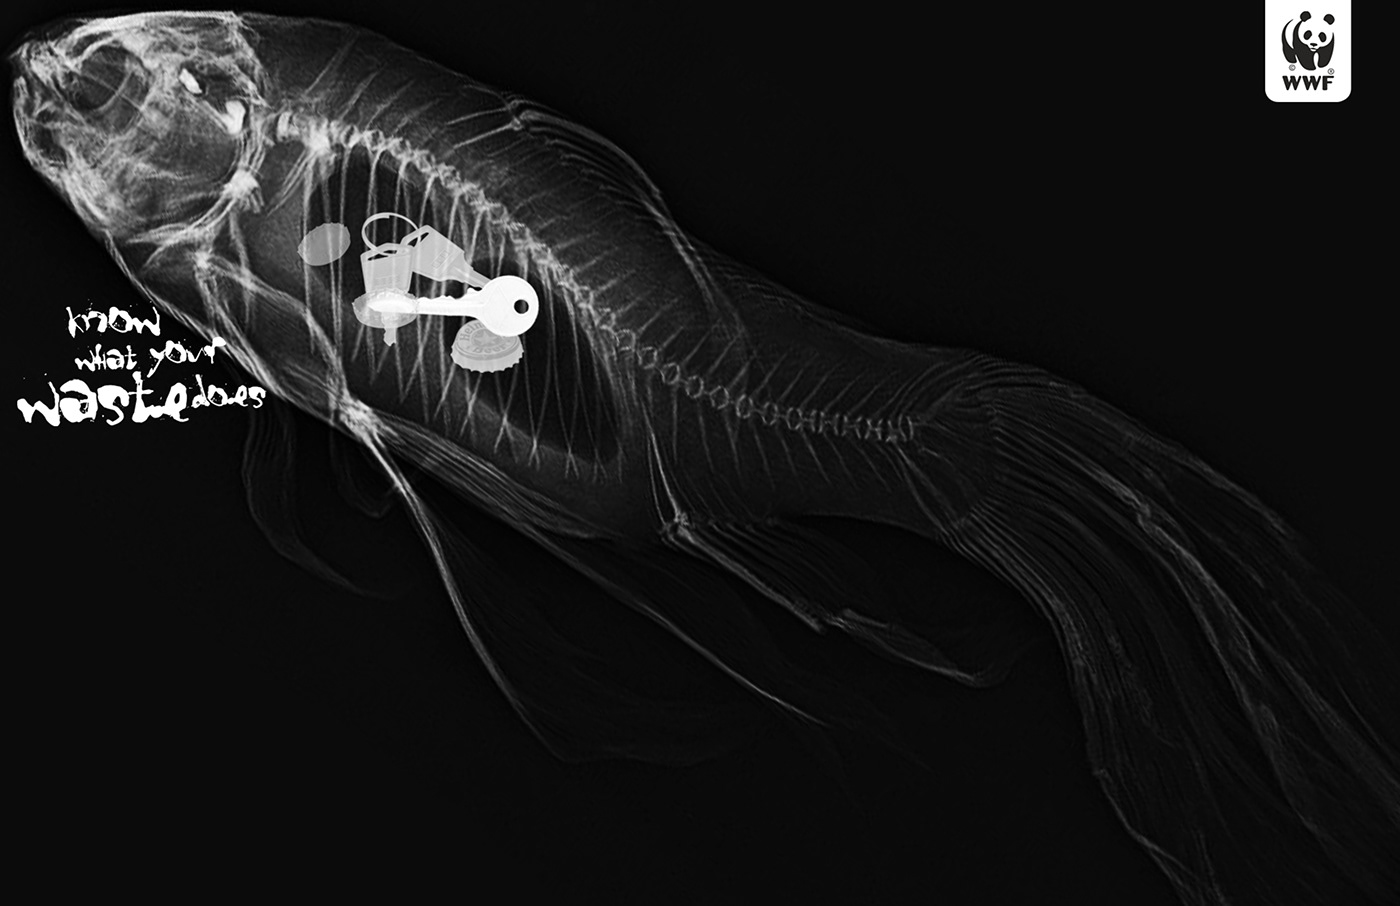 global warming marine mammals WWF world wide fund Promotion postcard design x-ray dark